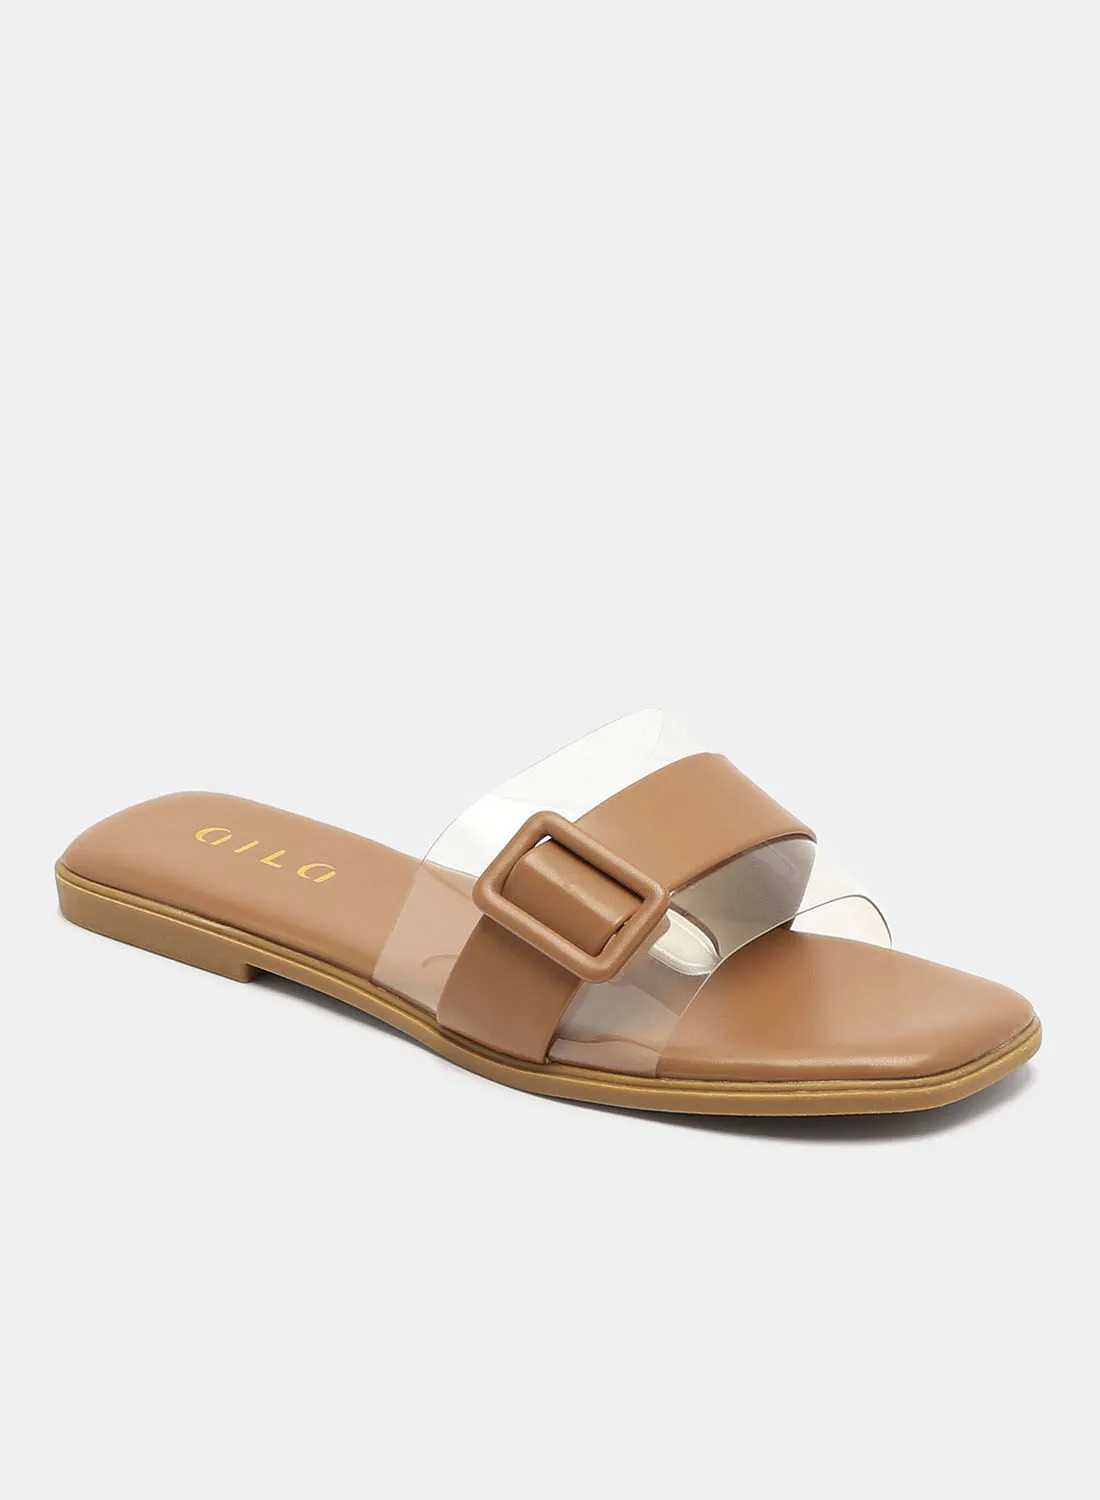 Aila Slip-On Casual Flat Sandals Tan